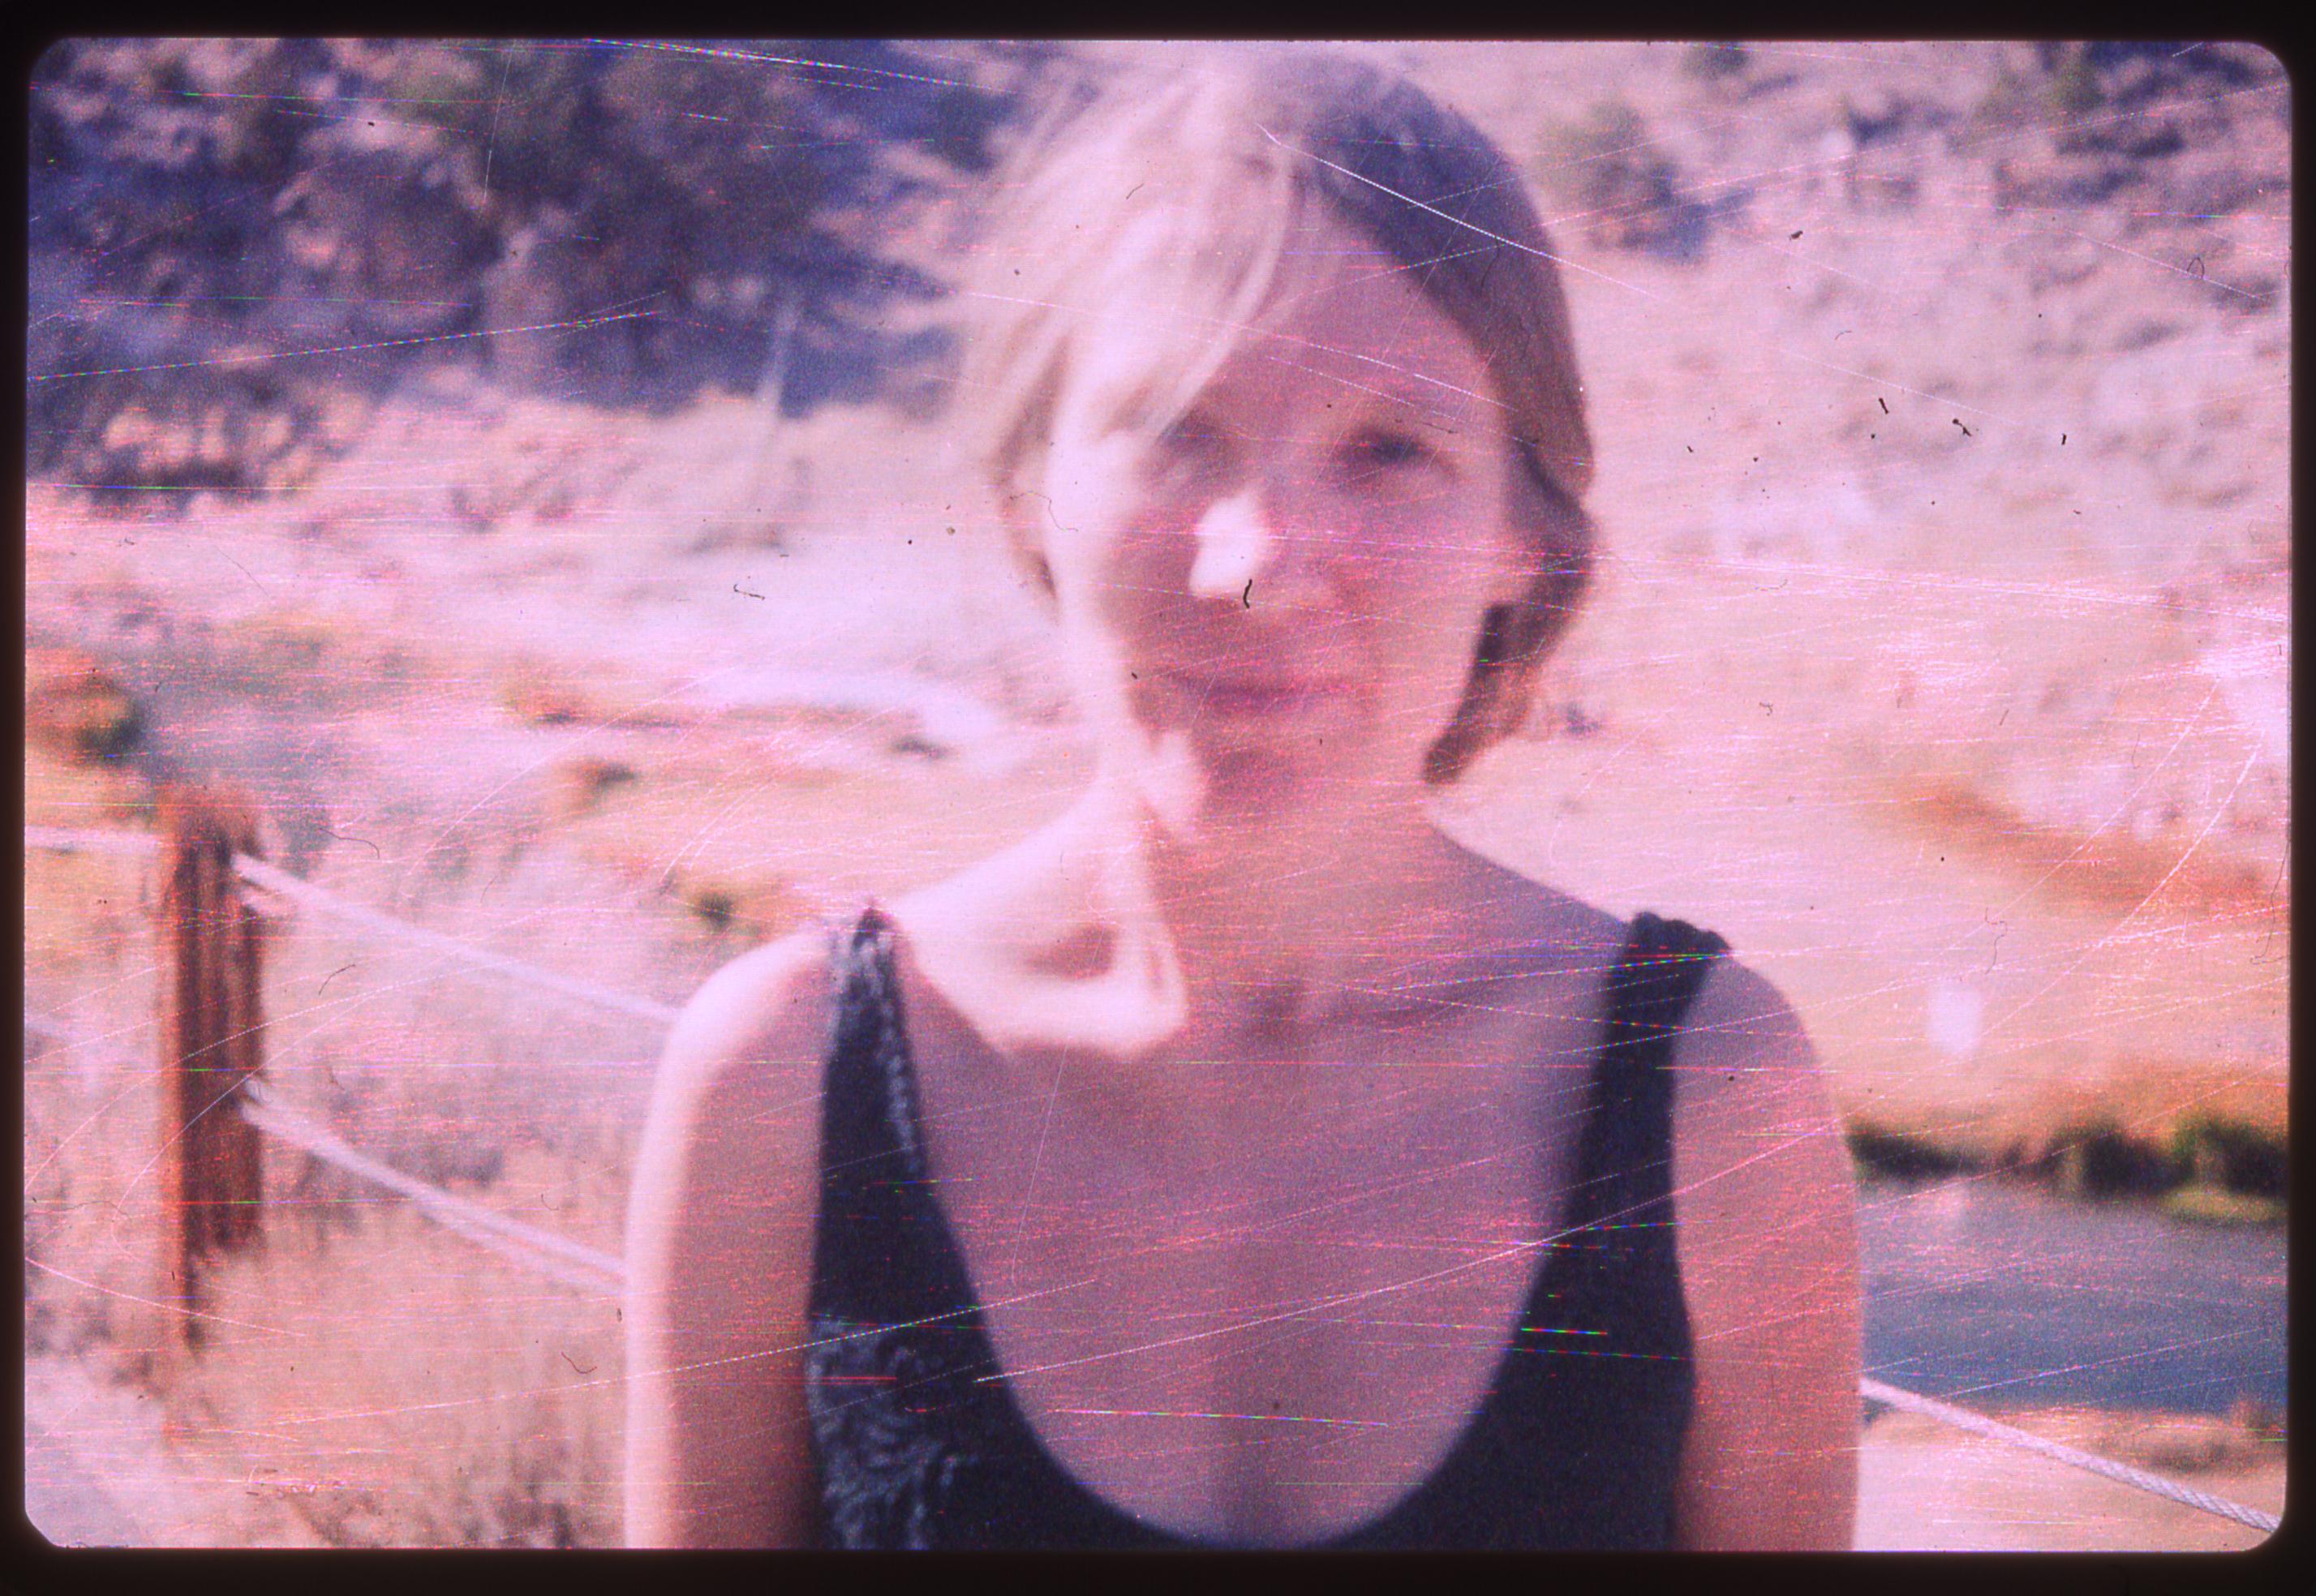 Stefanie Schneider Portrait Photograph - My own private Travel Diary - Bishop, CA - Hotsprings